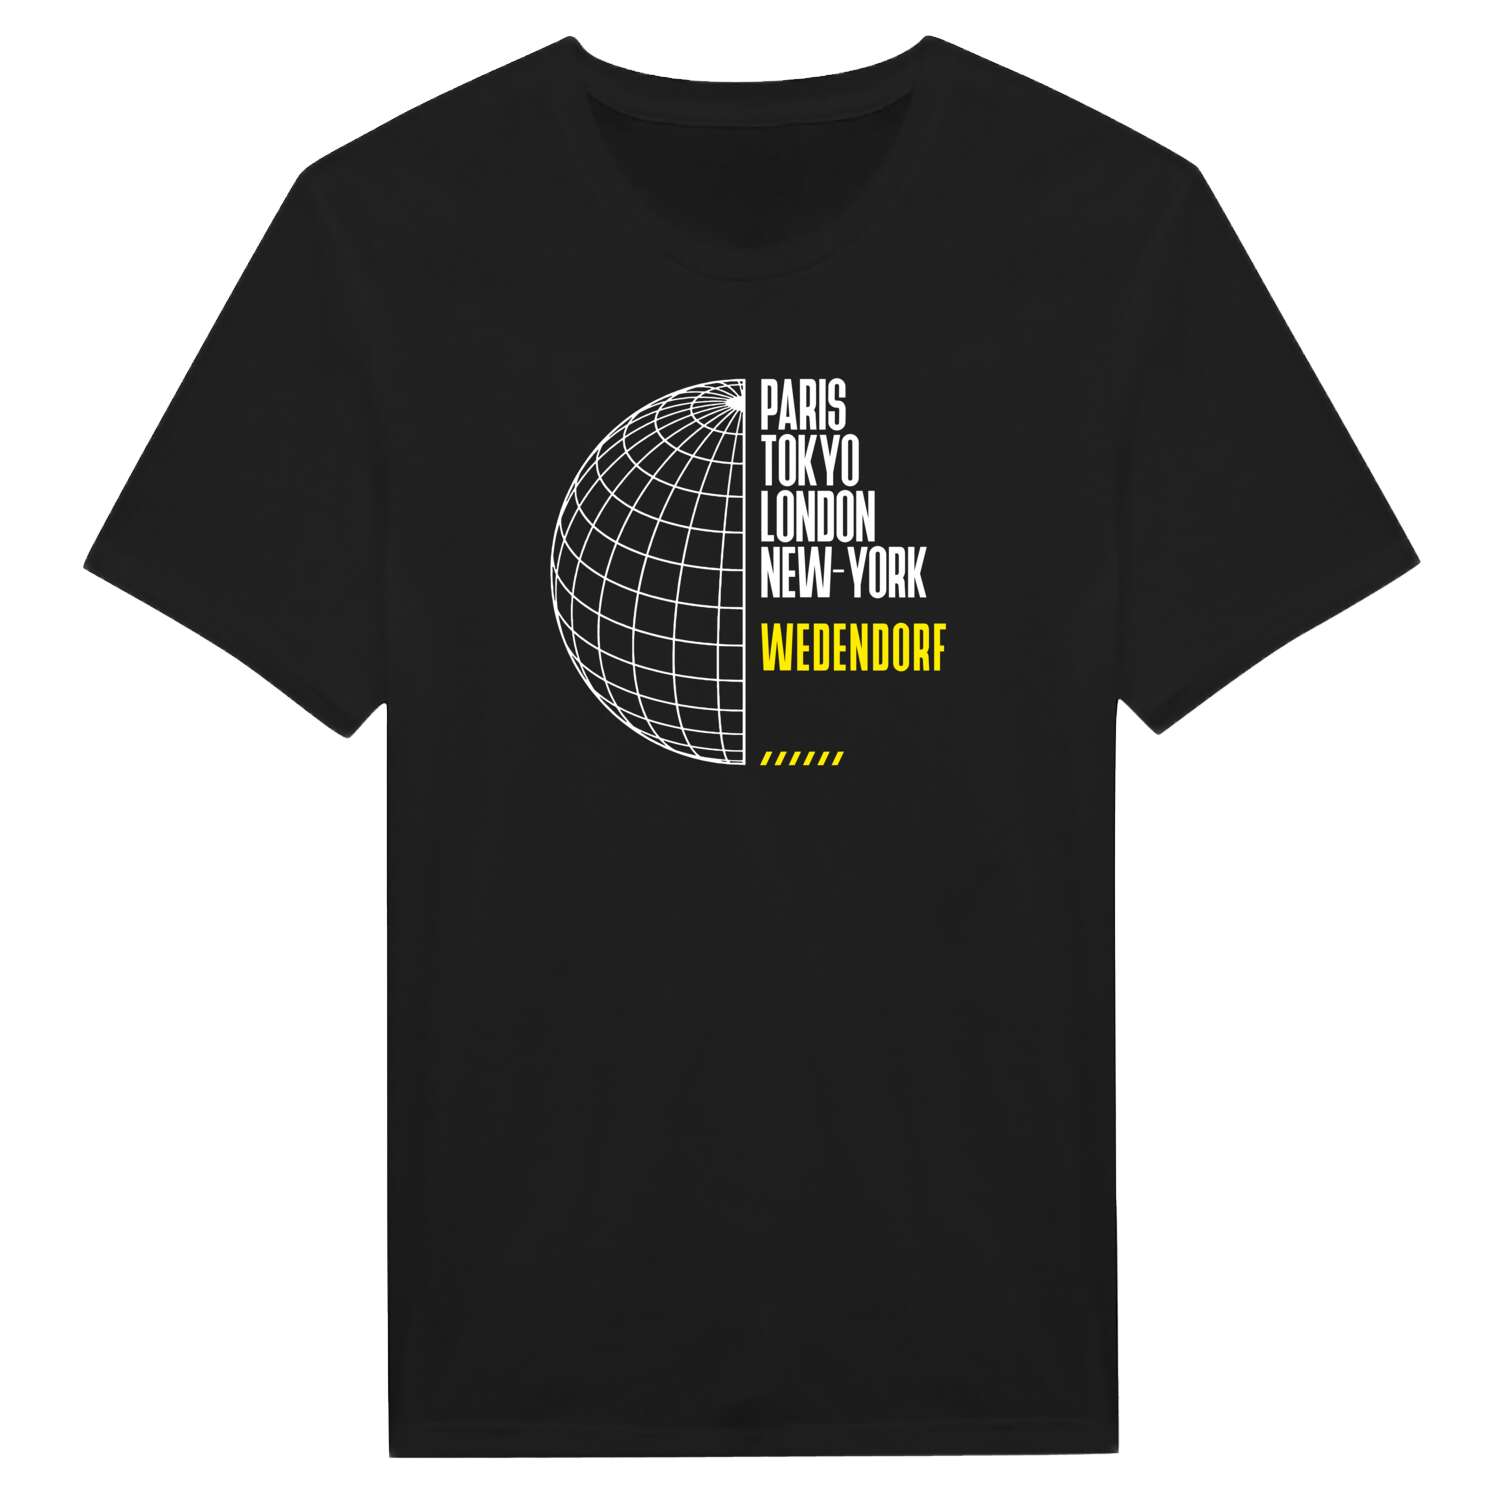 Wedendorf T-Shirt »Paris Tokyo London«